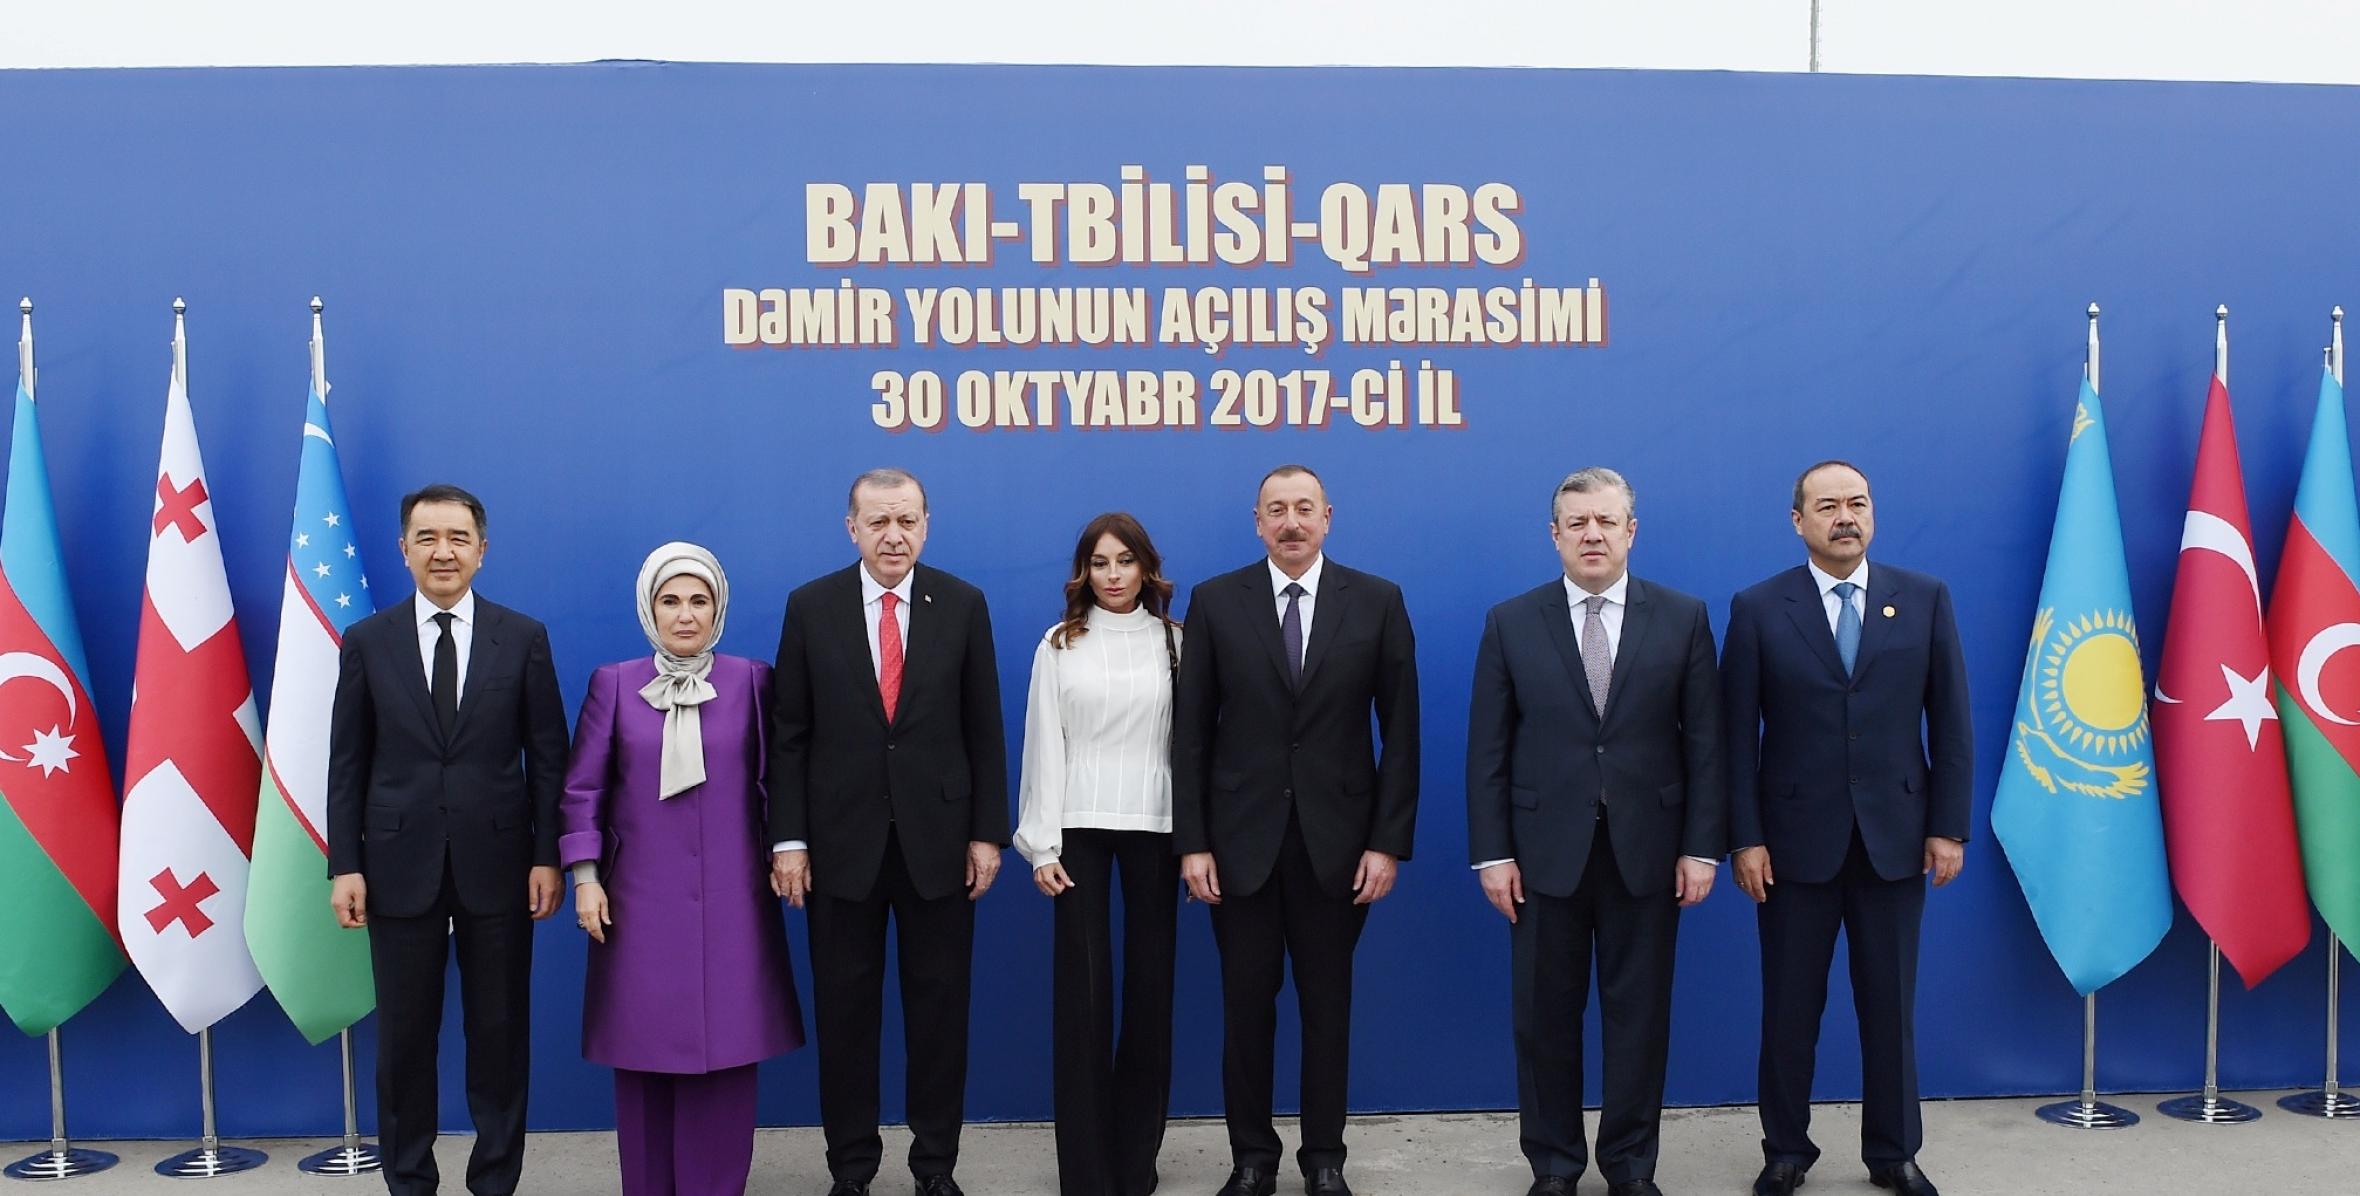 Ilham Aliyev attended the opening ceremony of Baku-Tbilisi-Kars railway